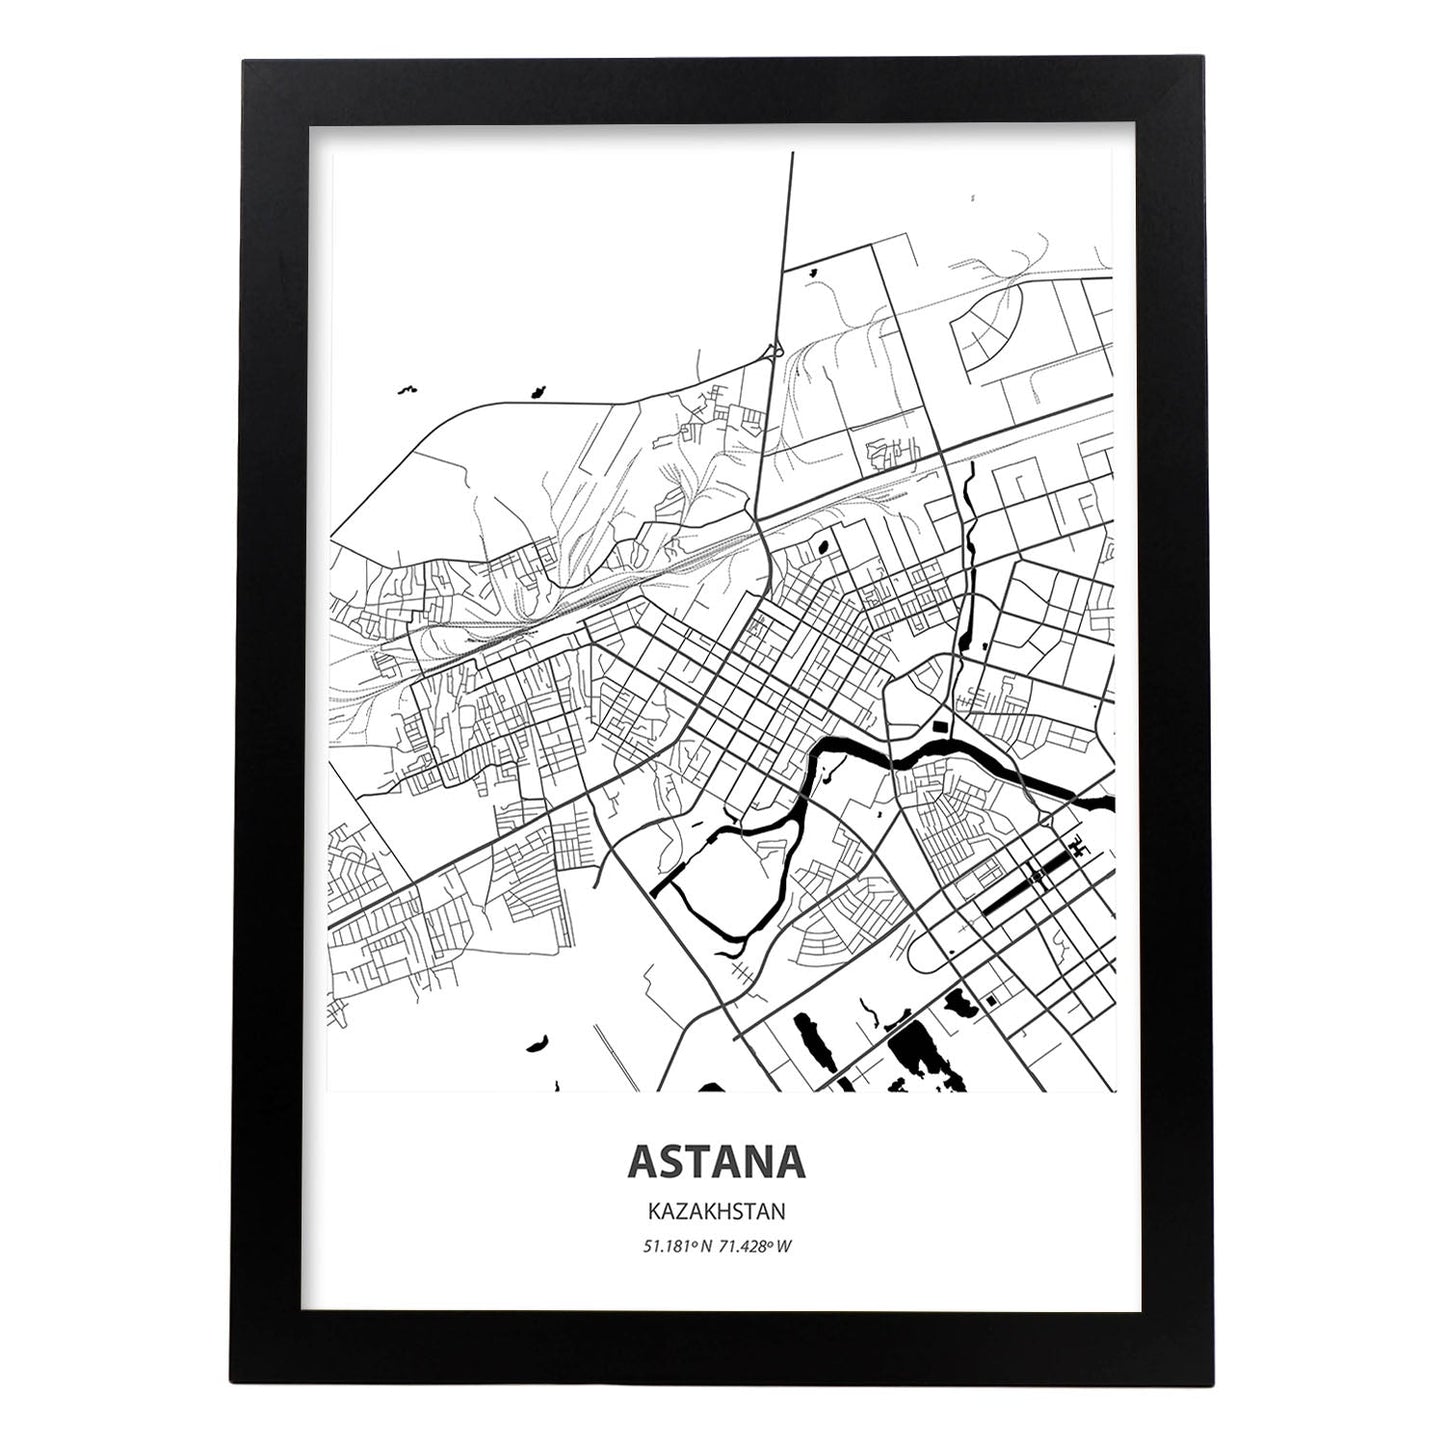 Poster con mapa de Astana - Kazajistán. Láminas de ciudades de Asia con mares y ríos en color negro.-Artwork-Nacnic-A4-Marco Negro-Nacnic Estudio SL